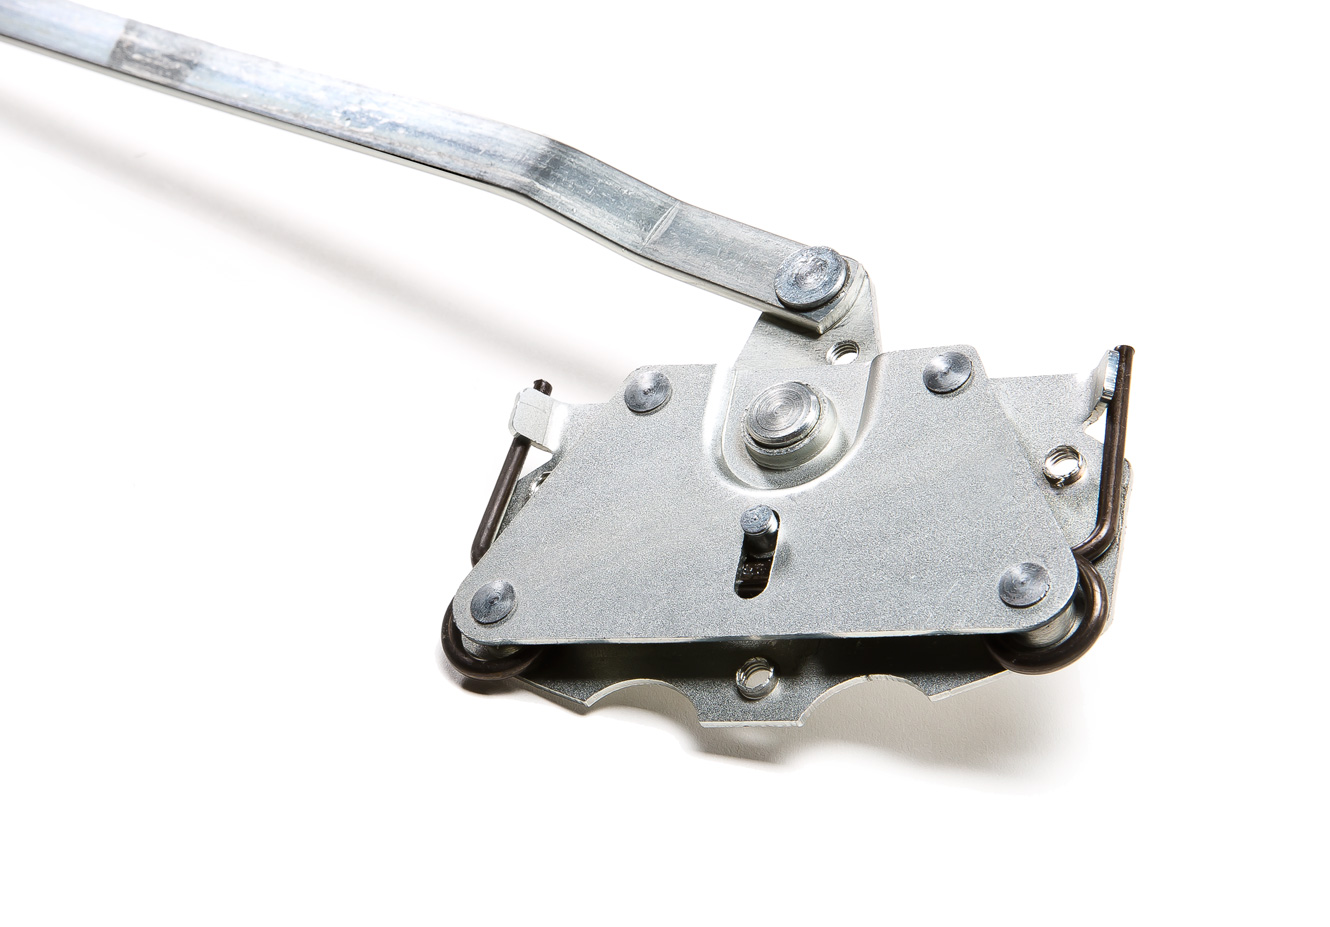 Türverriegelungs-Mechanismus
Lock remote control
Mécanisme de 